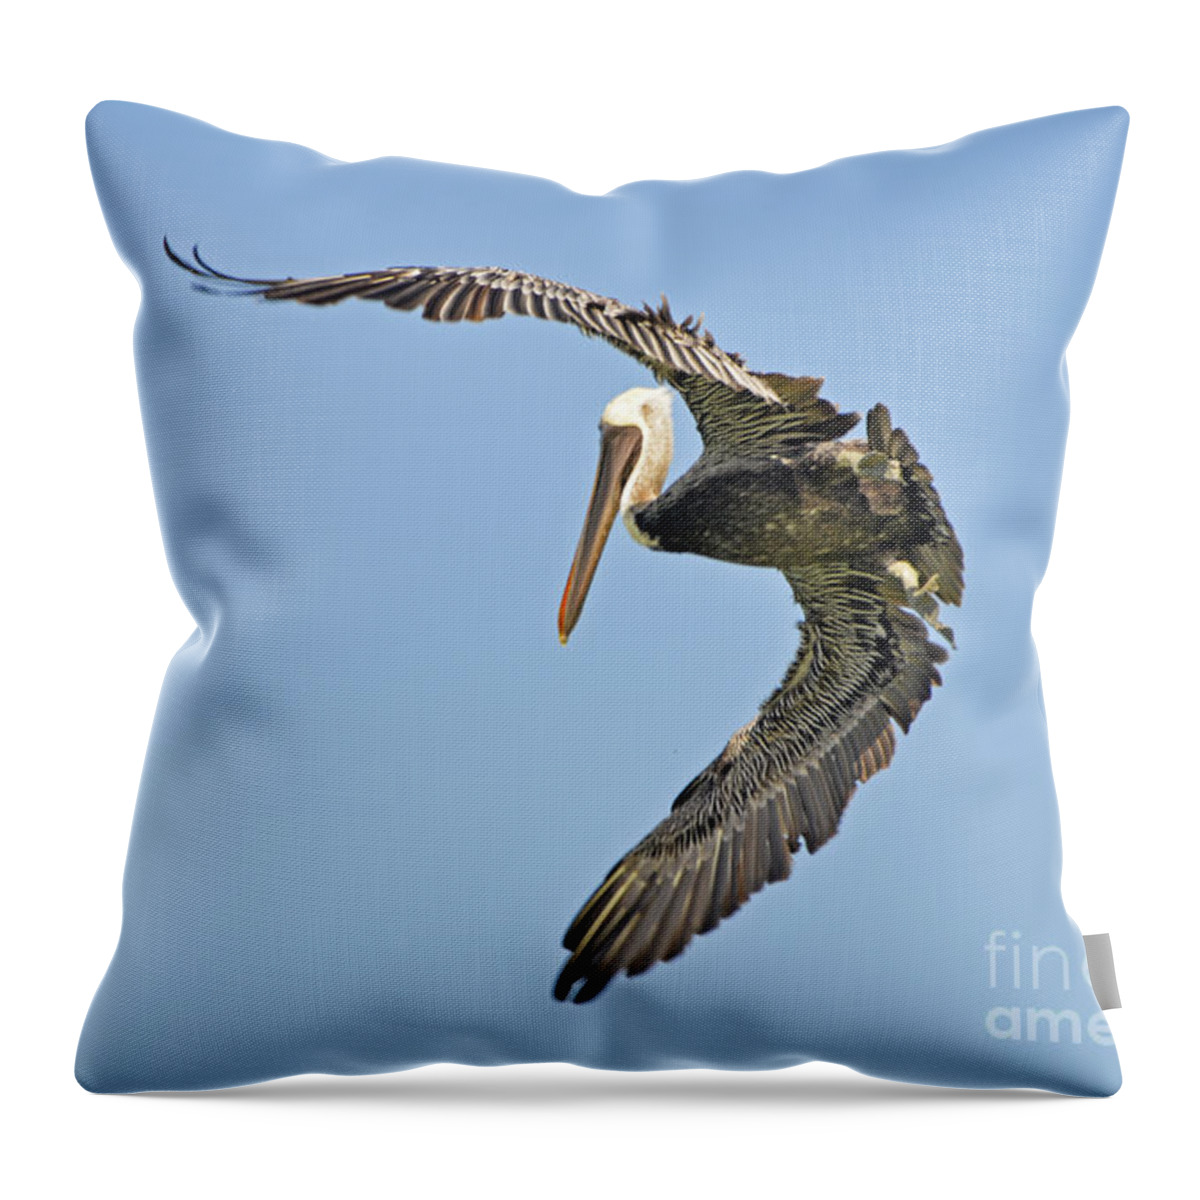 Pelicano Throw Pillow featuring the photograph The Pelicano Hug by PatriZio M Busnel